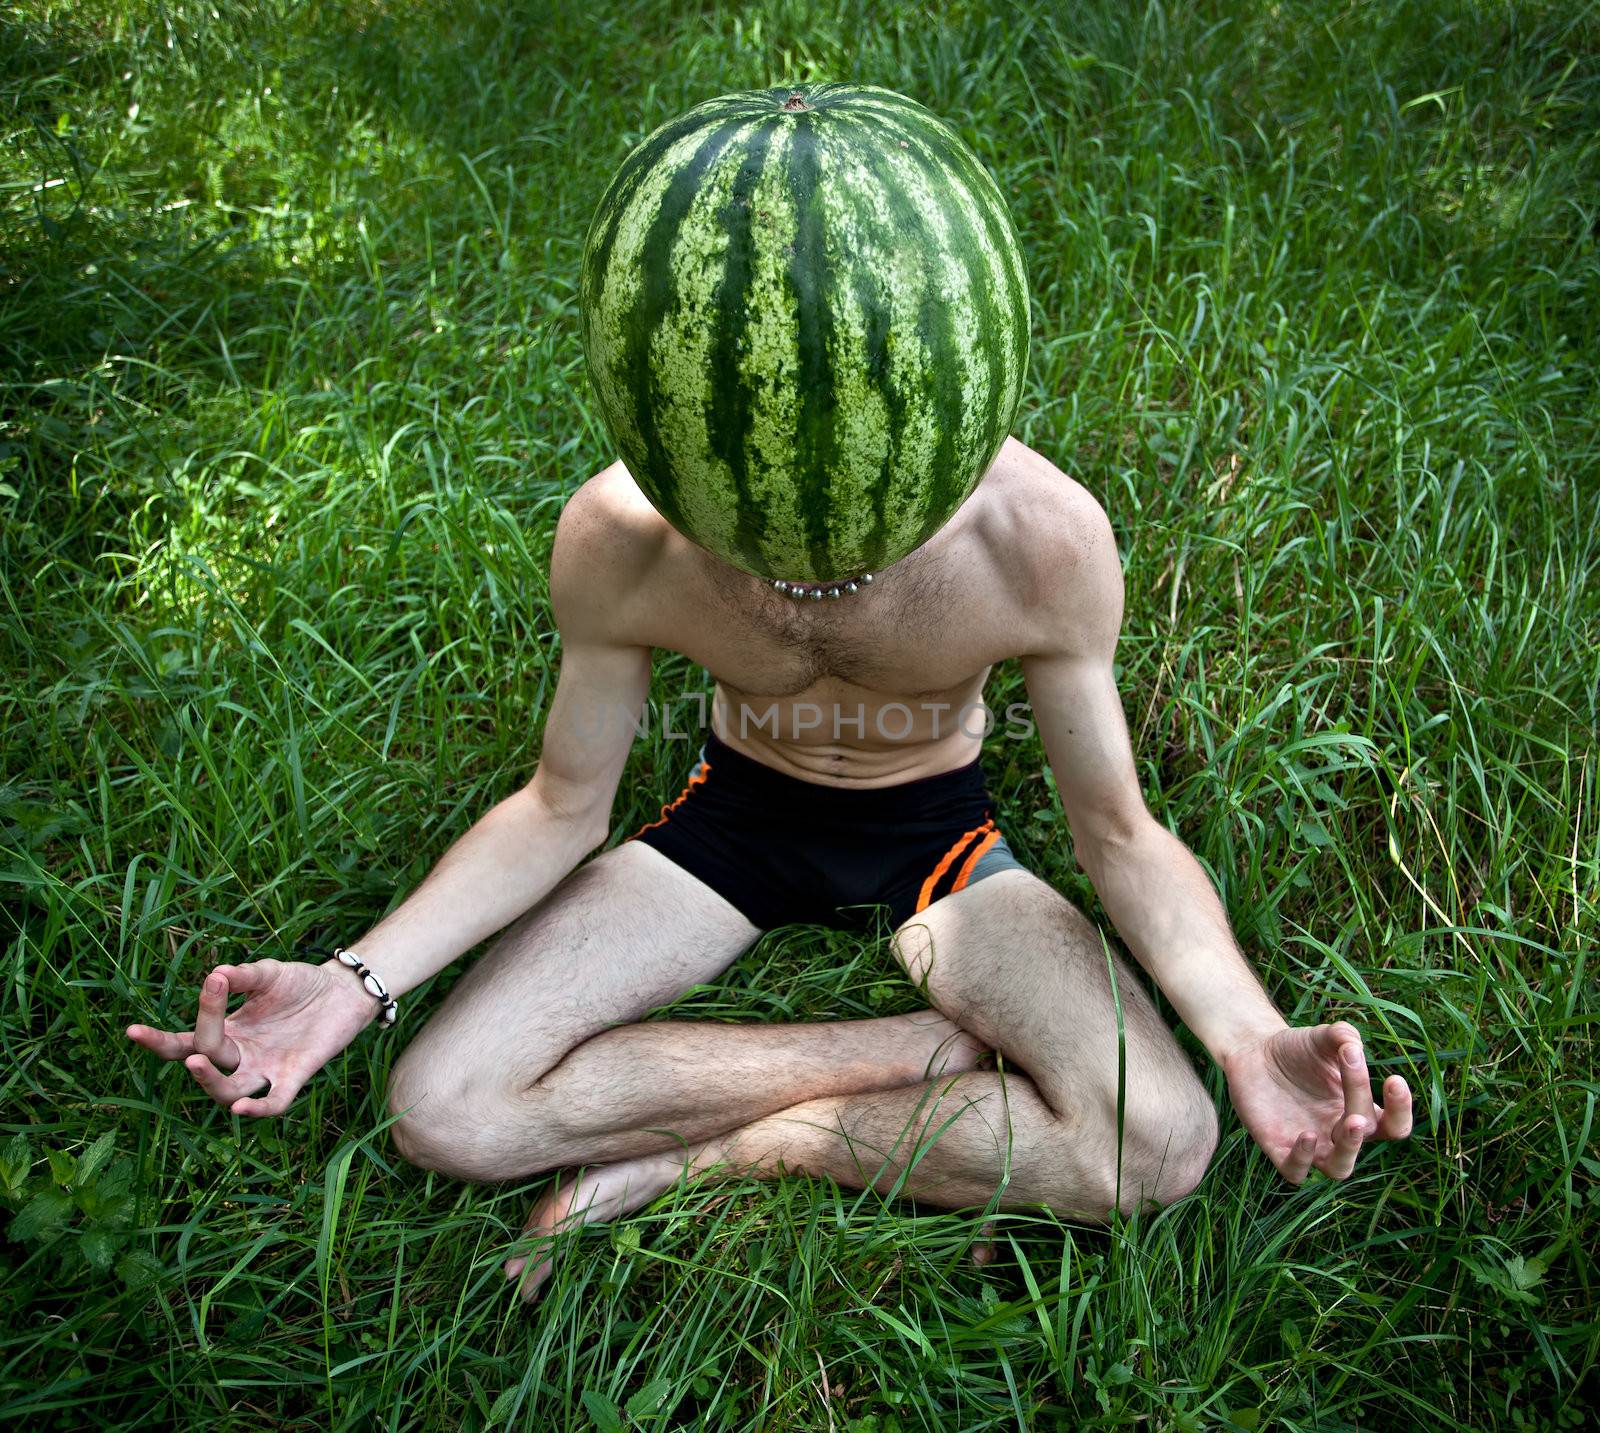 Humorous photo of watermelon meditation